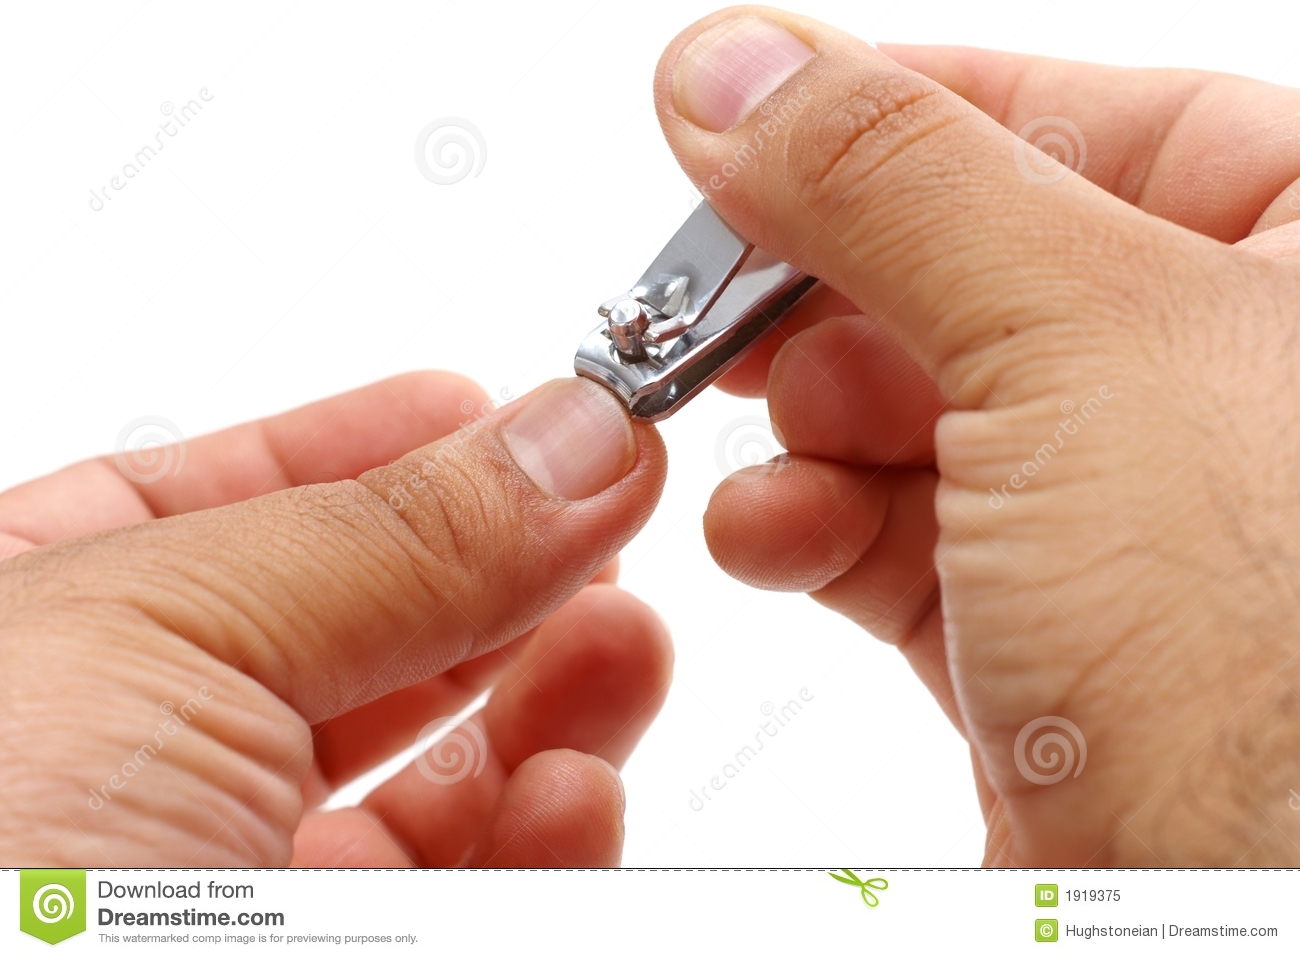 Nails clipart clean nail. Portal 